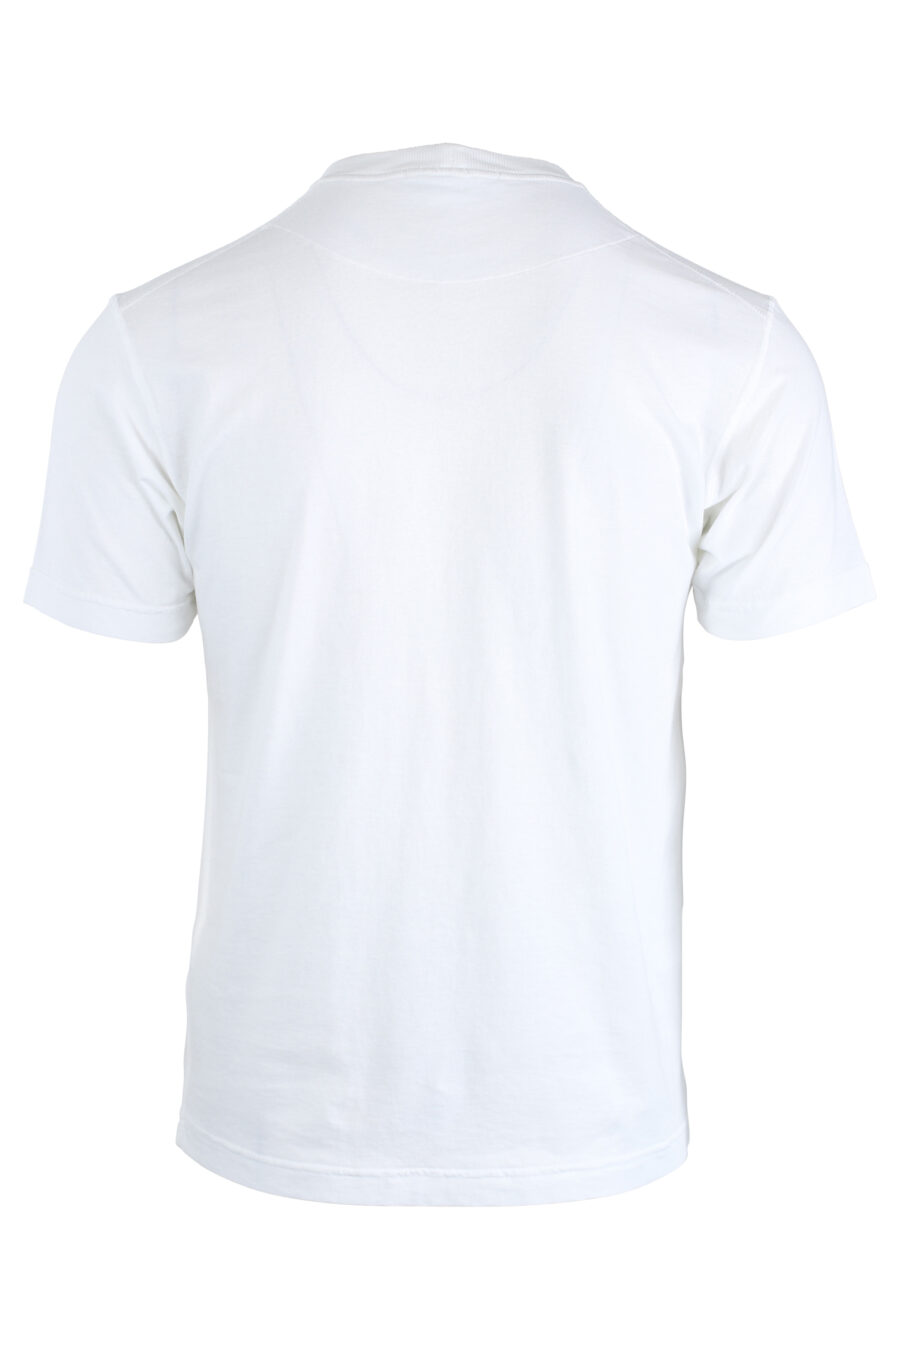 Camiseta blanca con bolsillo - IMG 1686